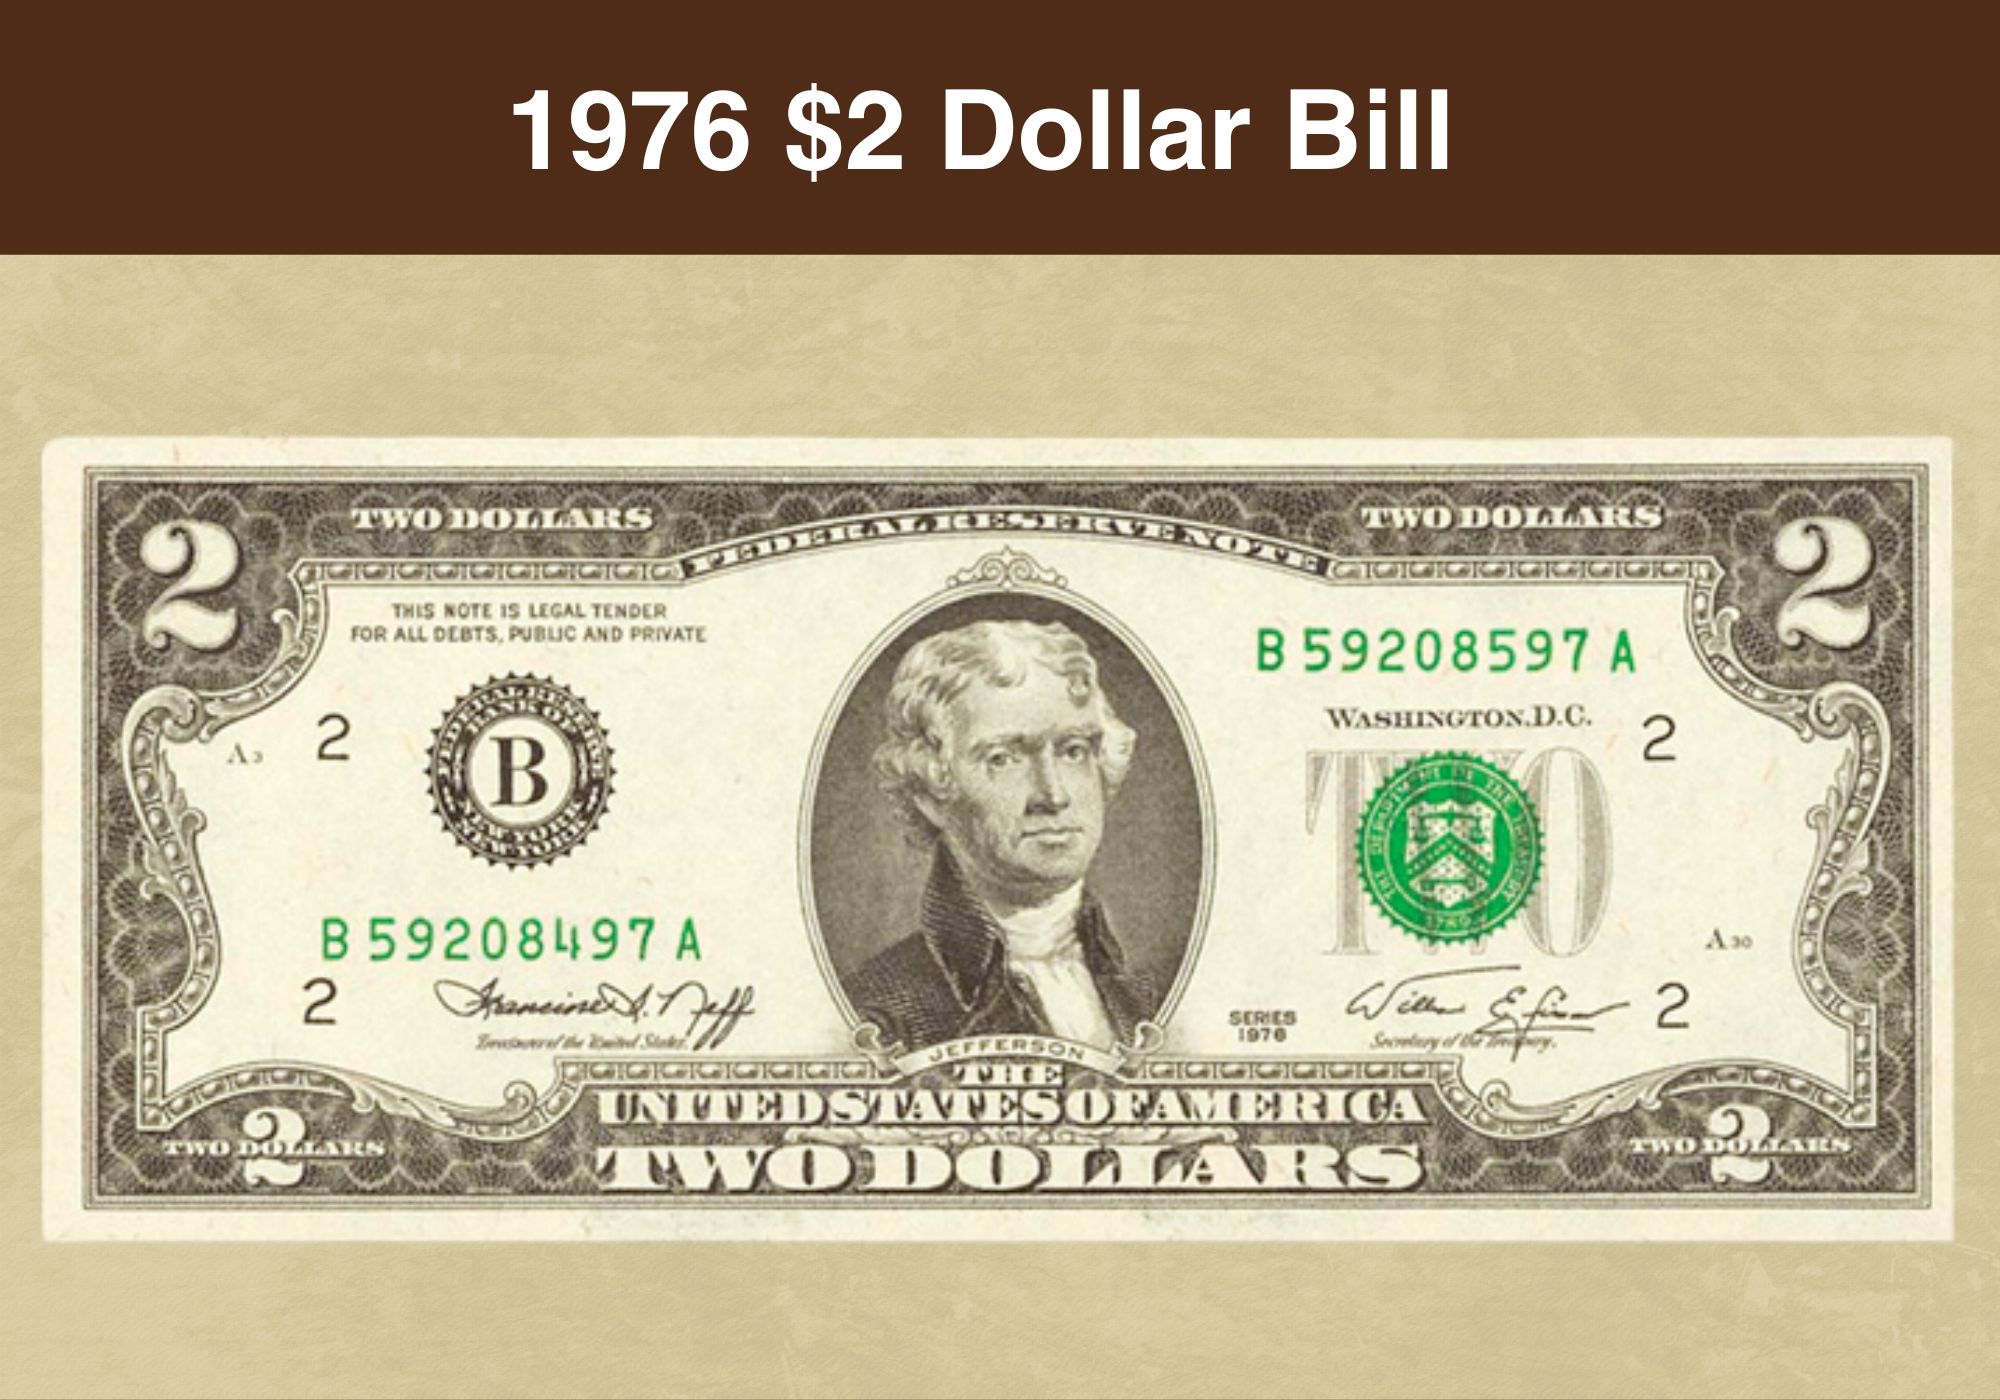 Evolution of the $10 bill